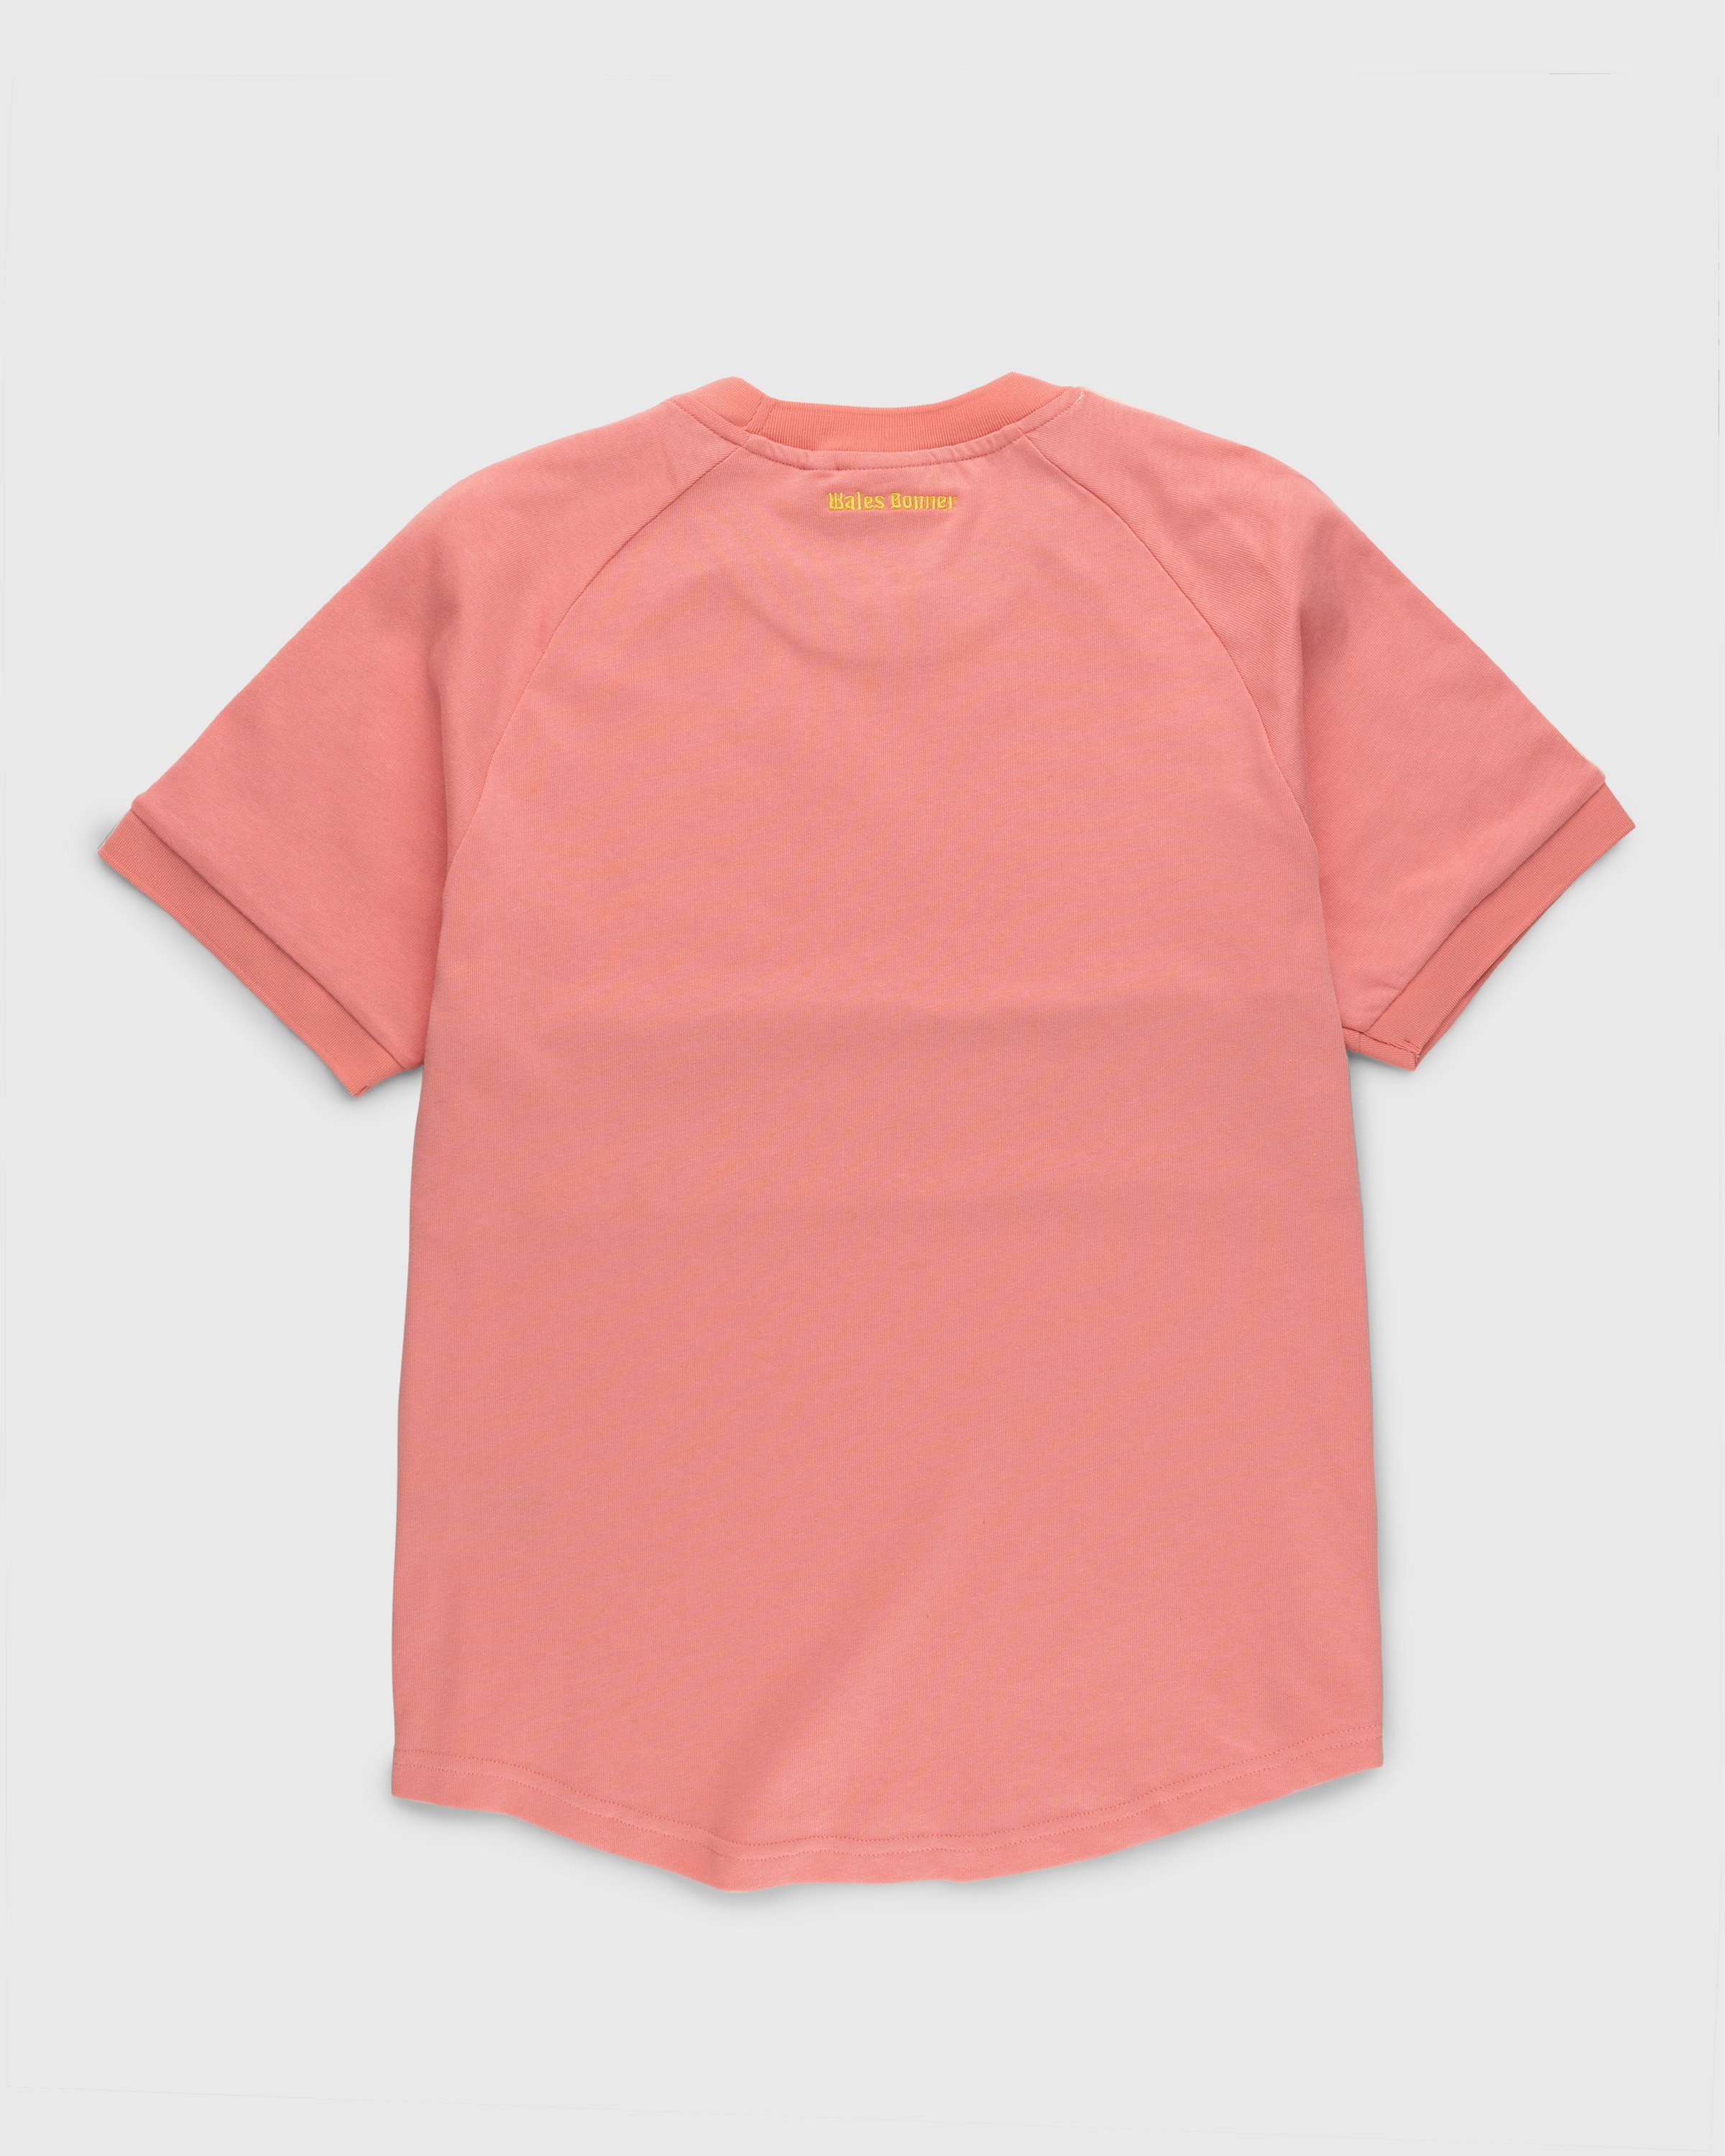 Adidas x Wales Bonner - WB Tee Tactile Rose - Clothing - Pink - Image 2